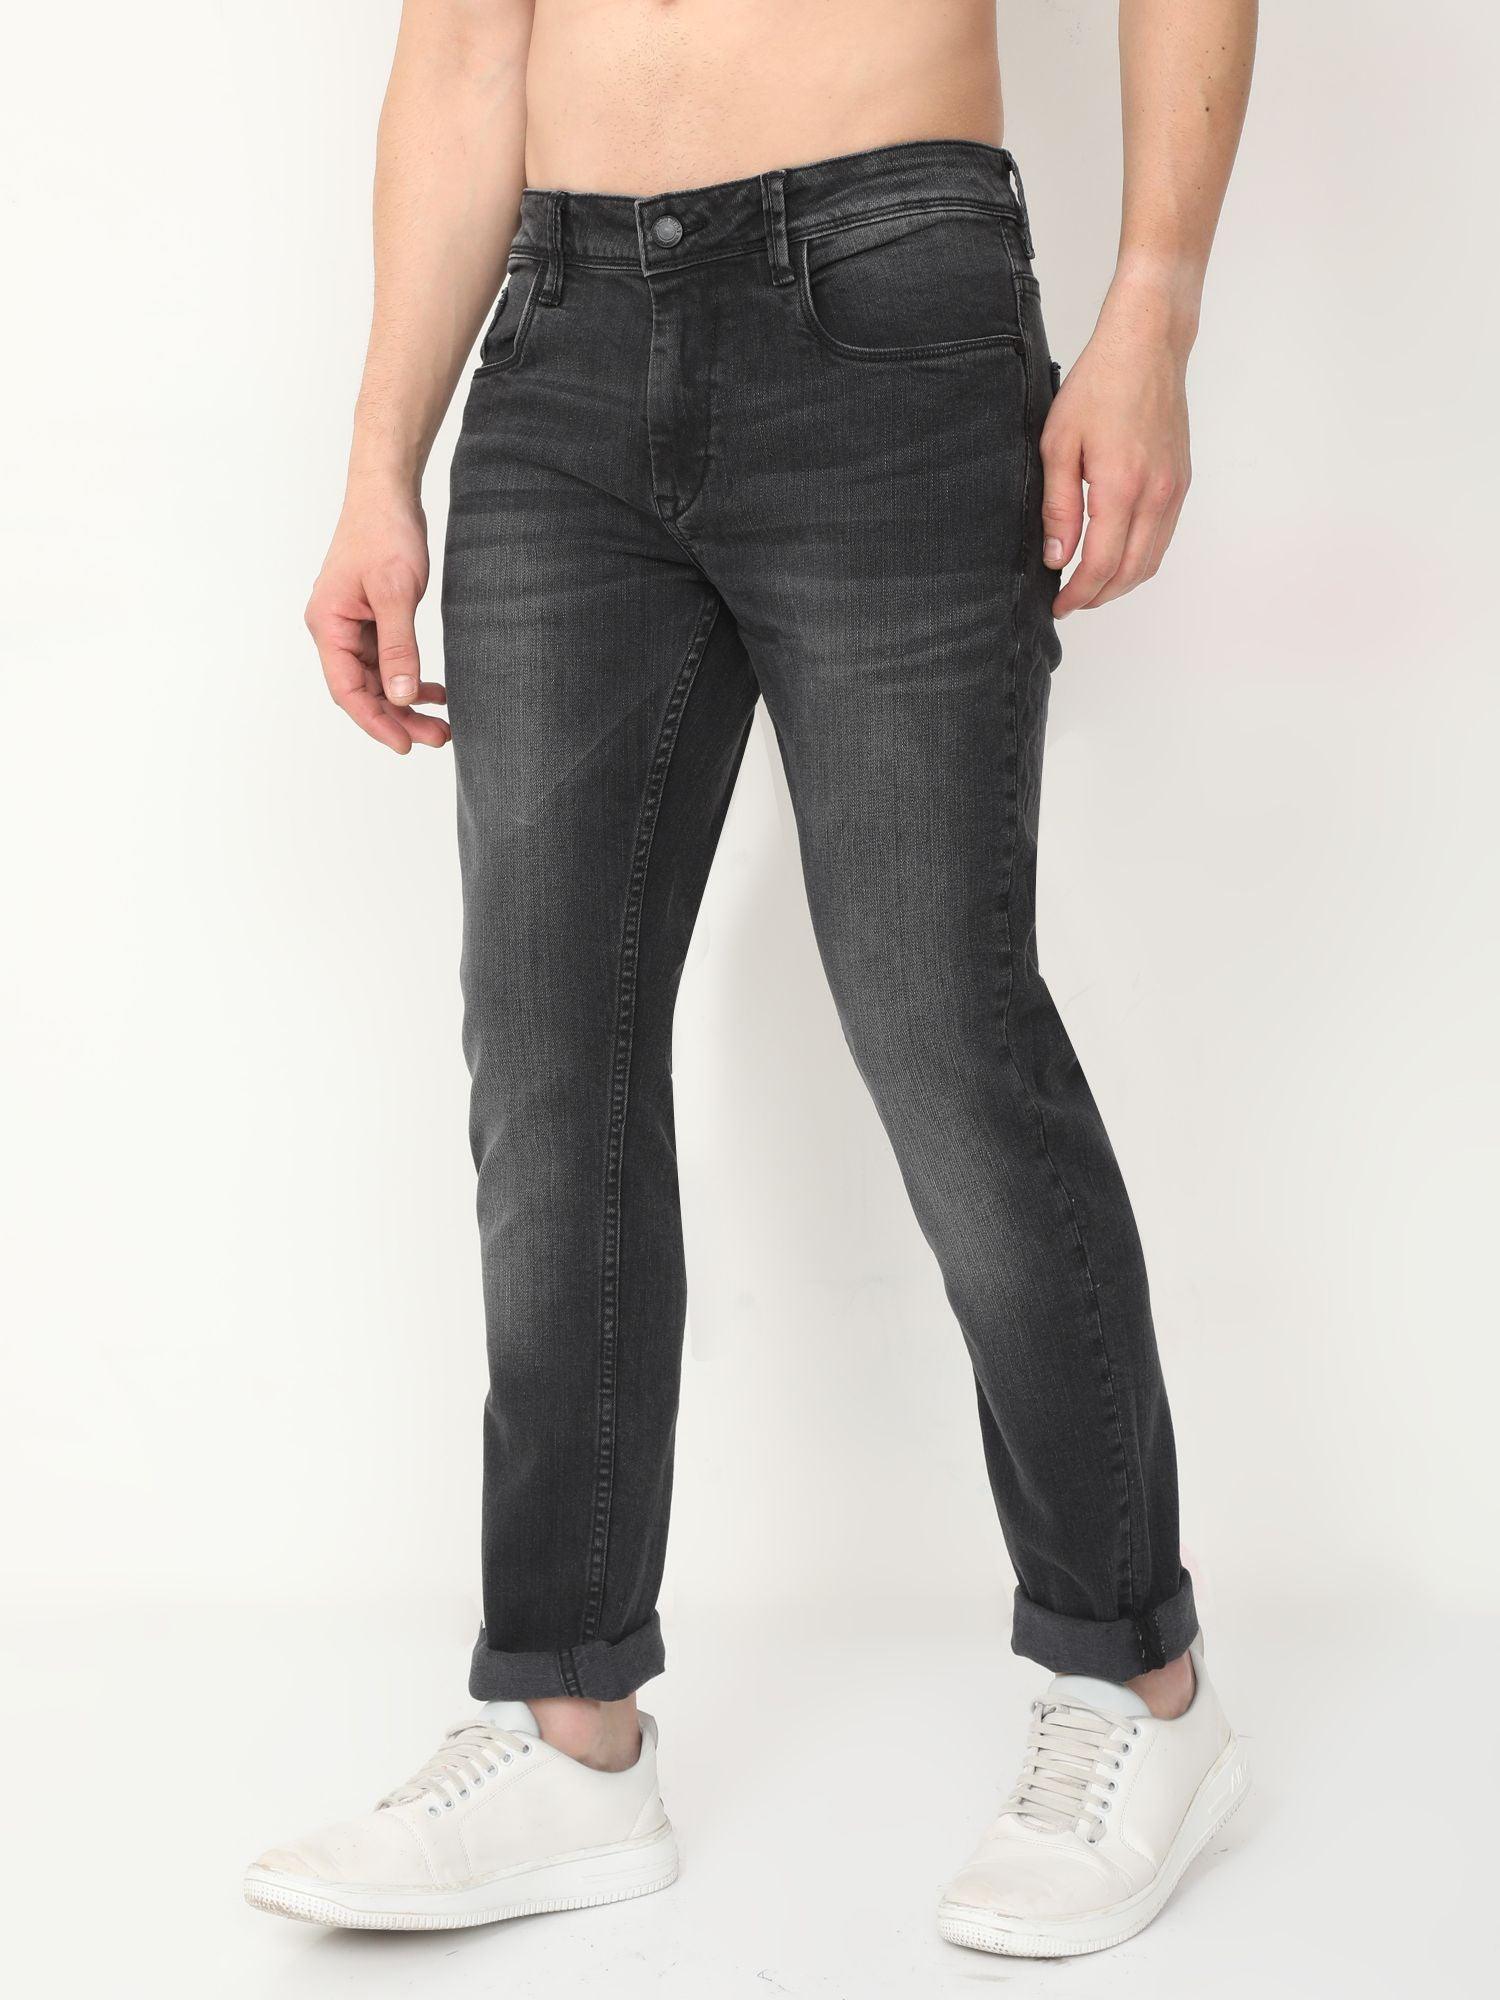 Men's Slim Fit Jeans -  Black 